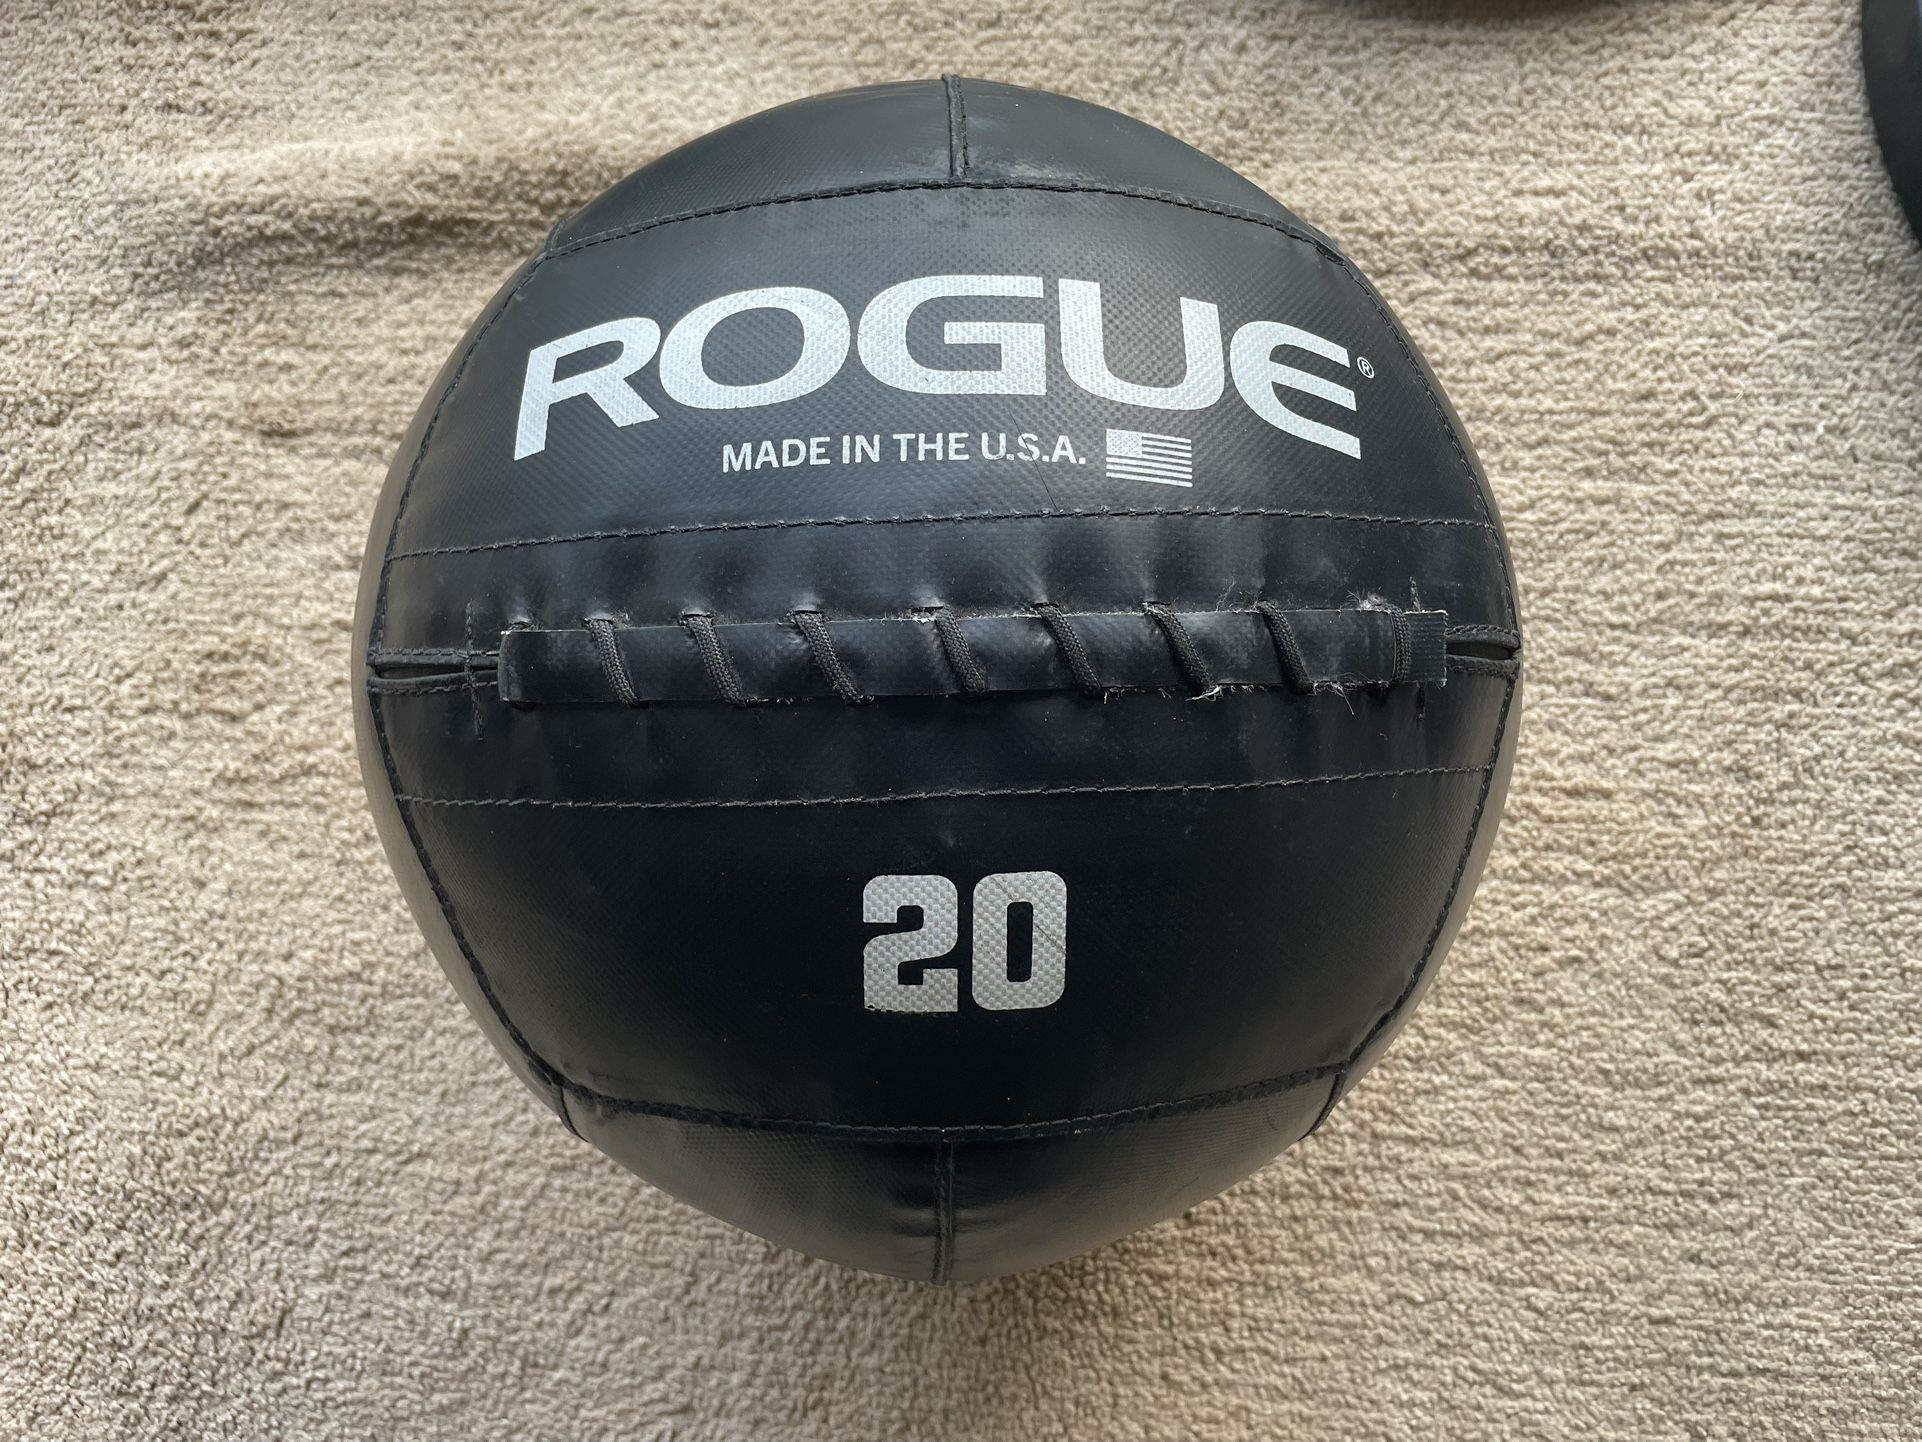 Rogue 20 lbs Medicine Ball